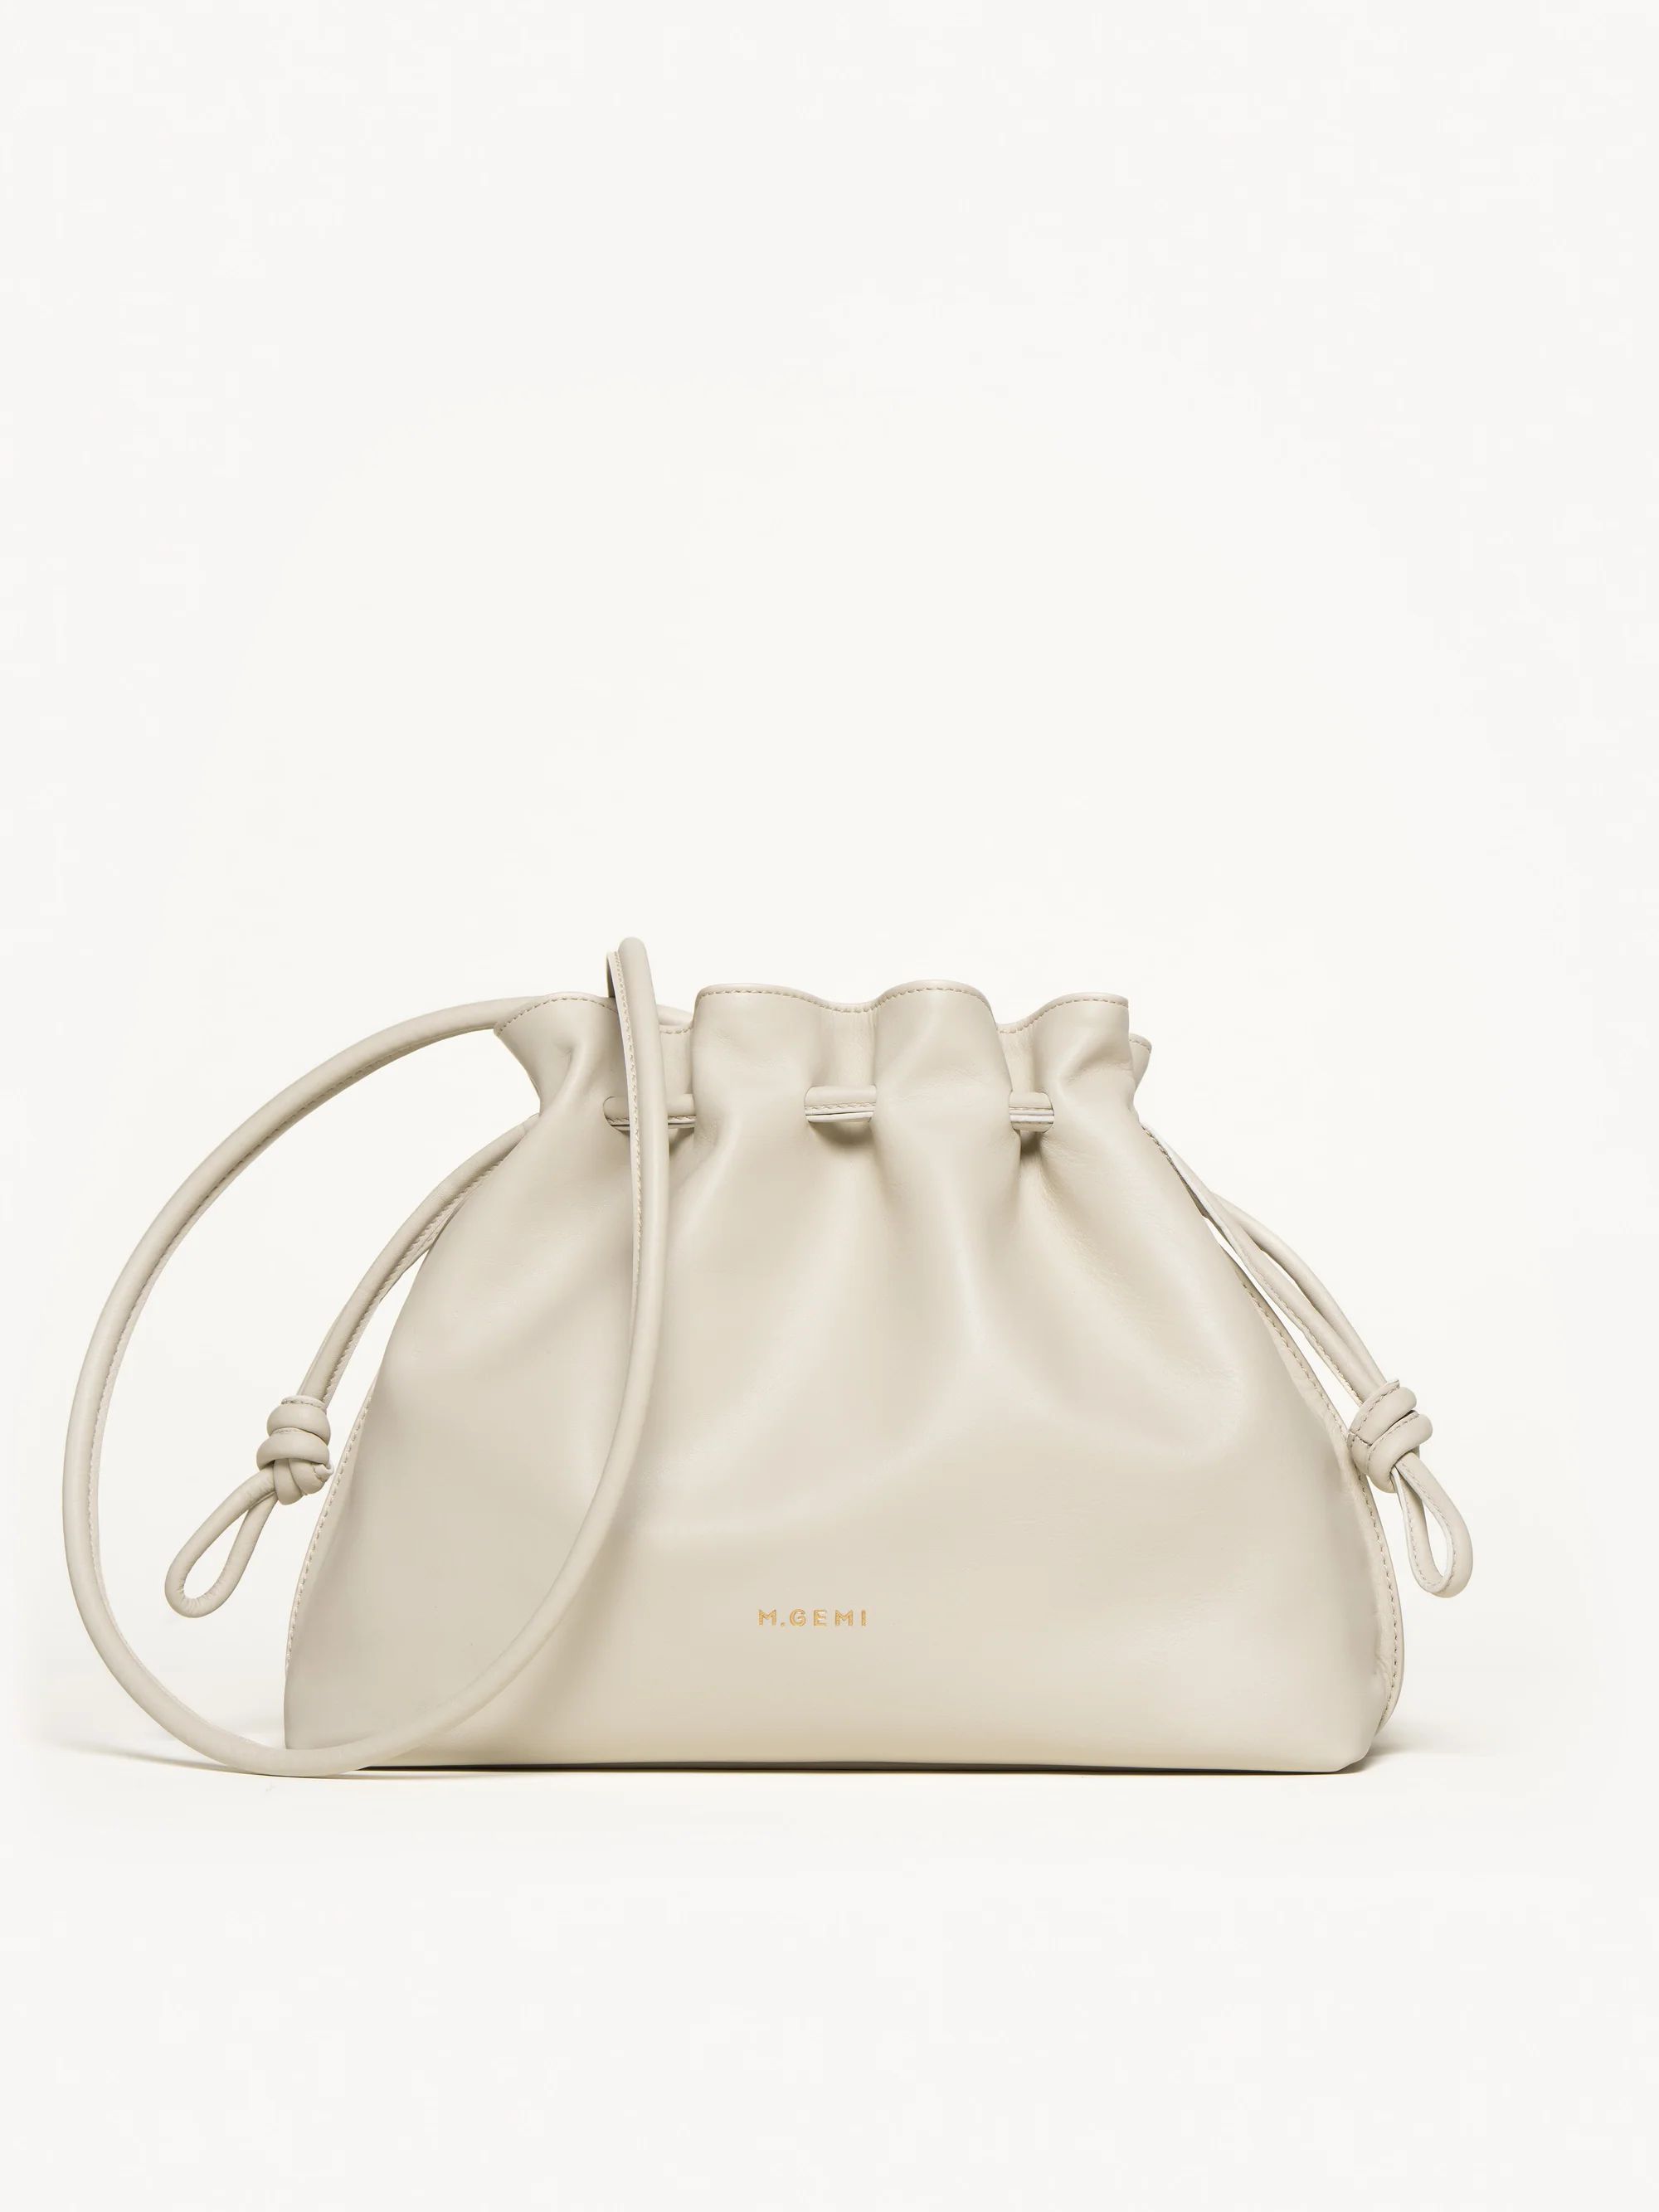 The Sarita Handbag | M.GEMI